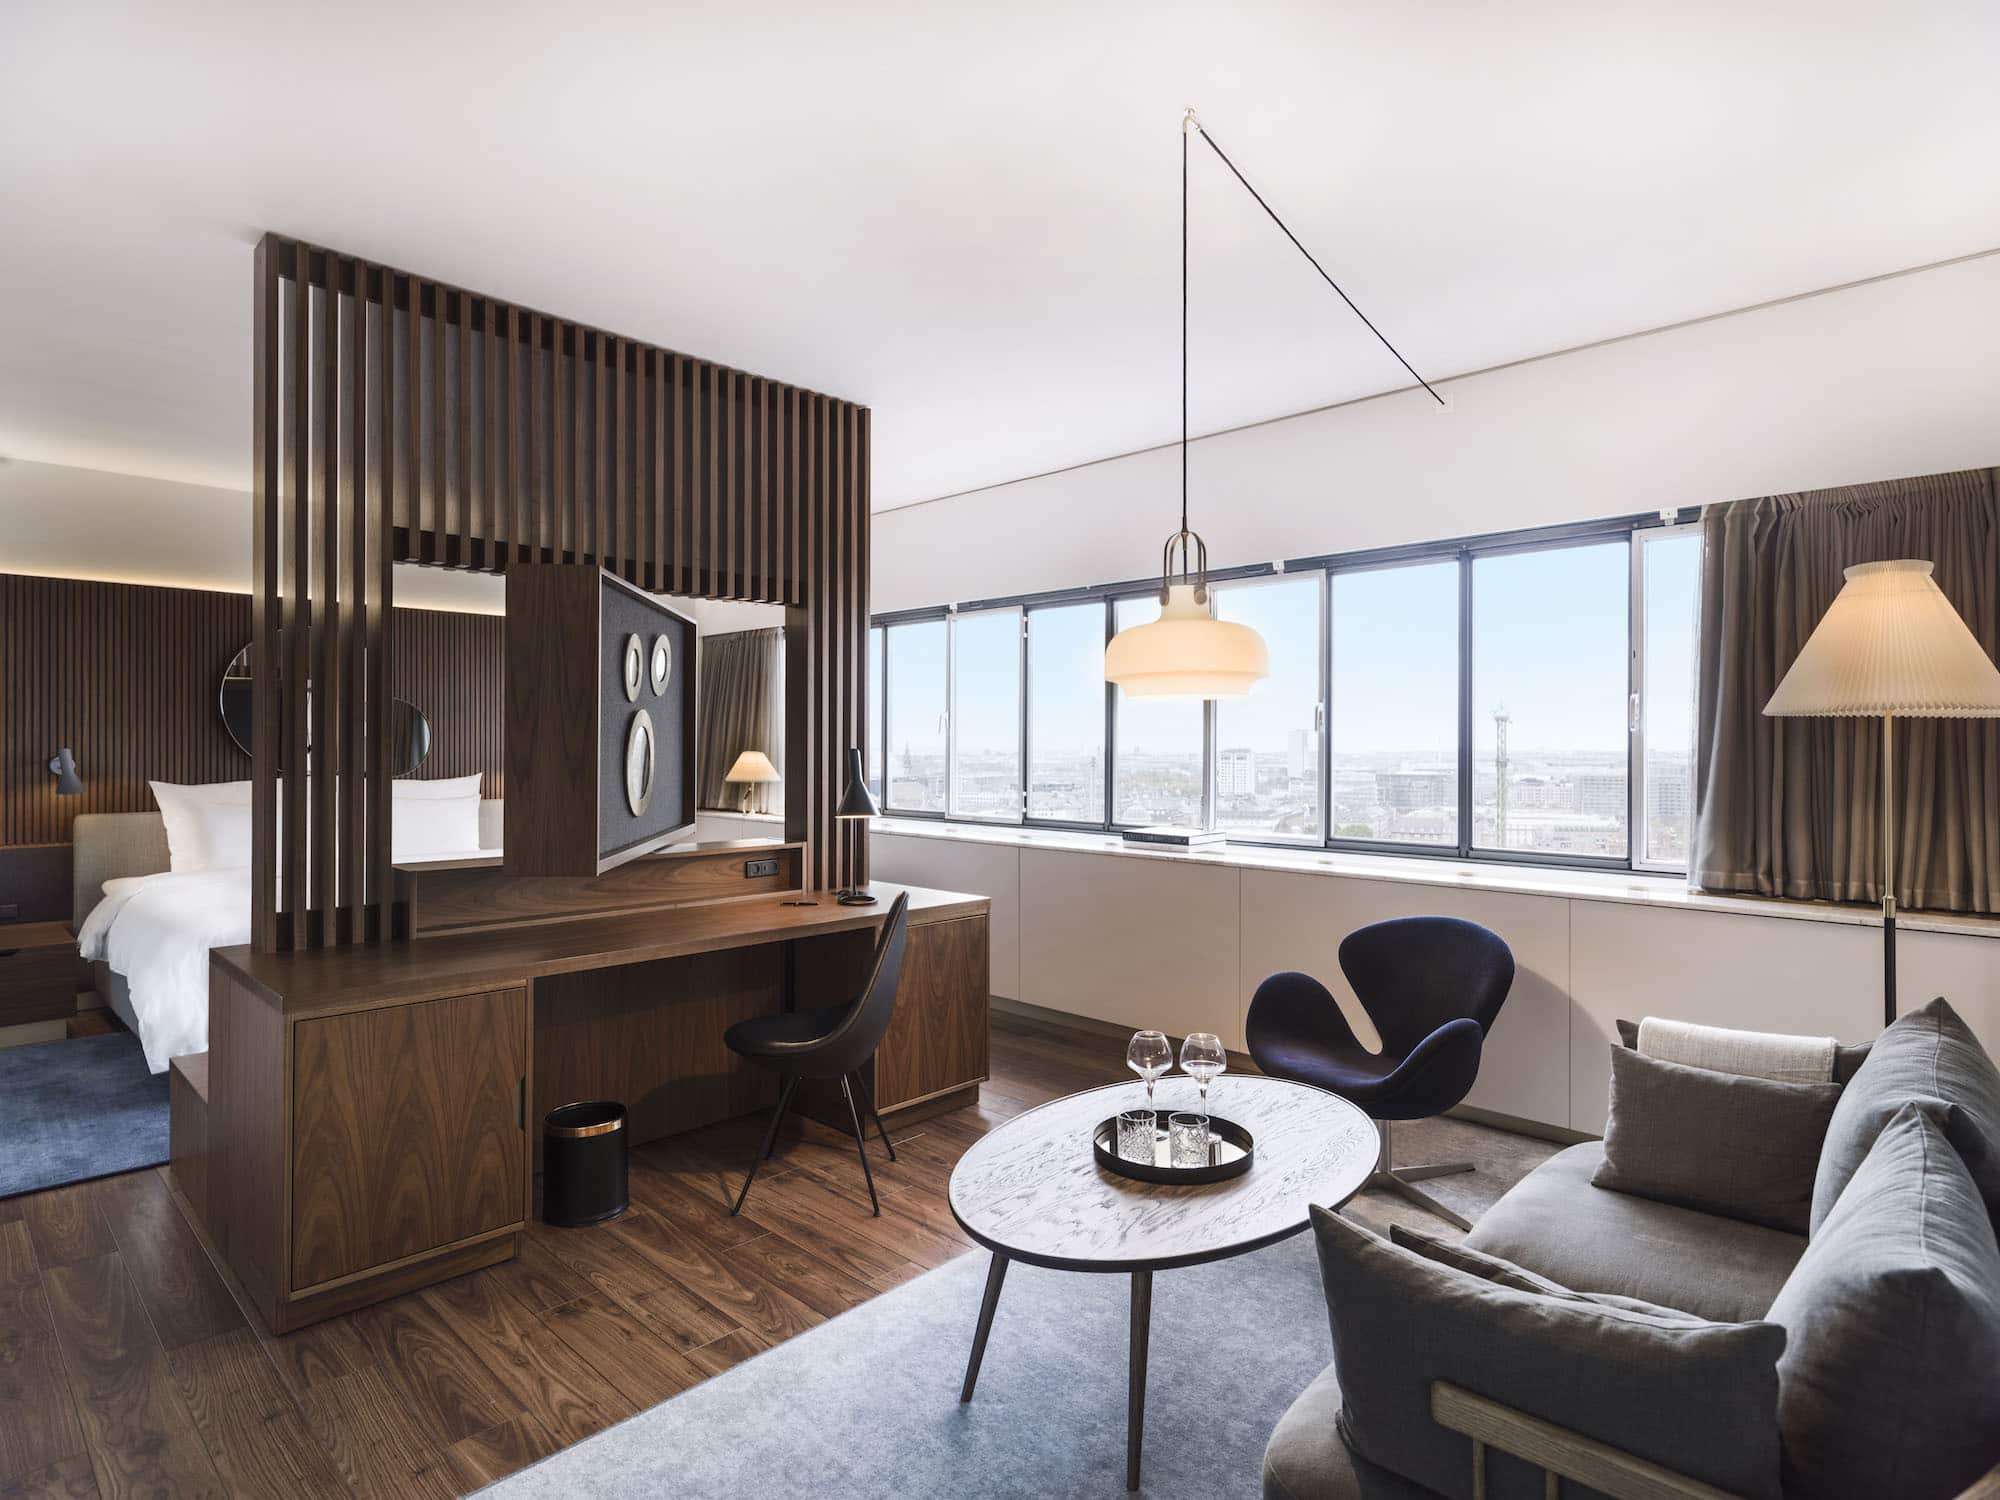 A modernist guest room at the Radisson Blu Royal Hotel in Copenhagen designed by Arne Jacobsen